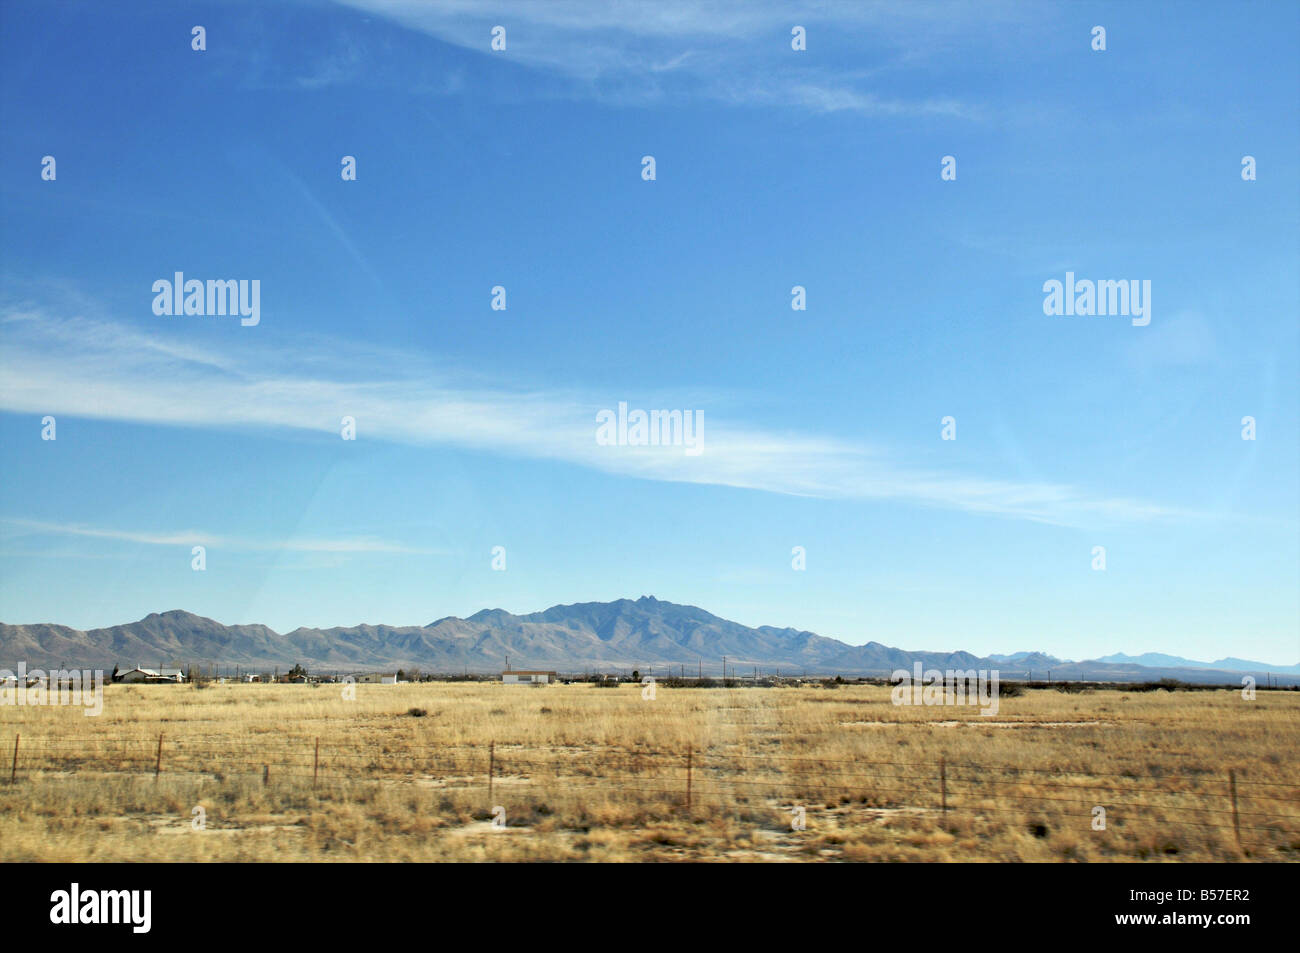 A Mountain range in the New Mexico desert Stock Photo